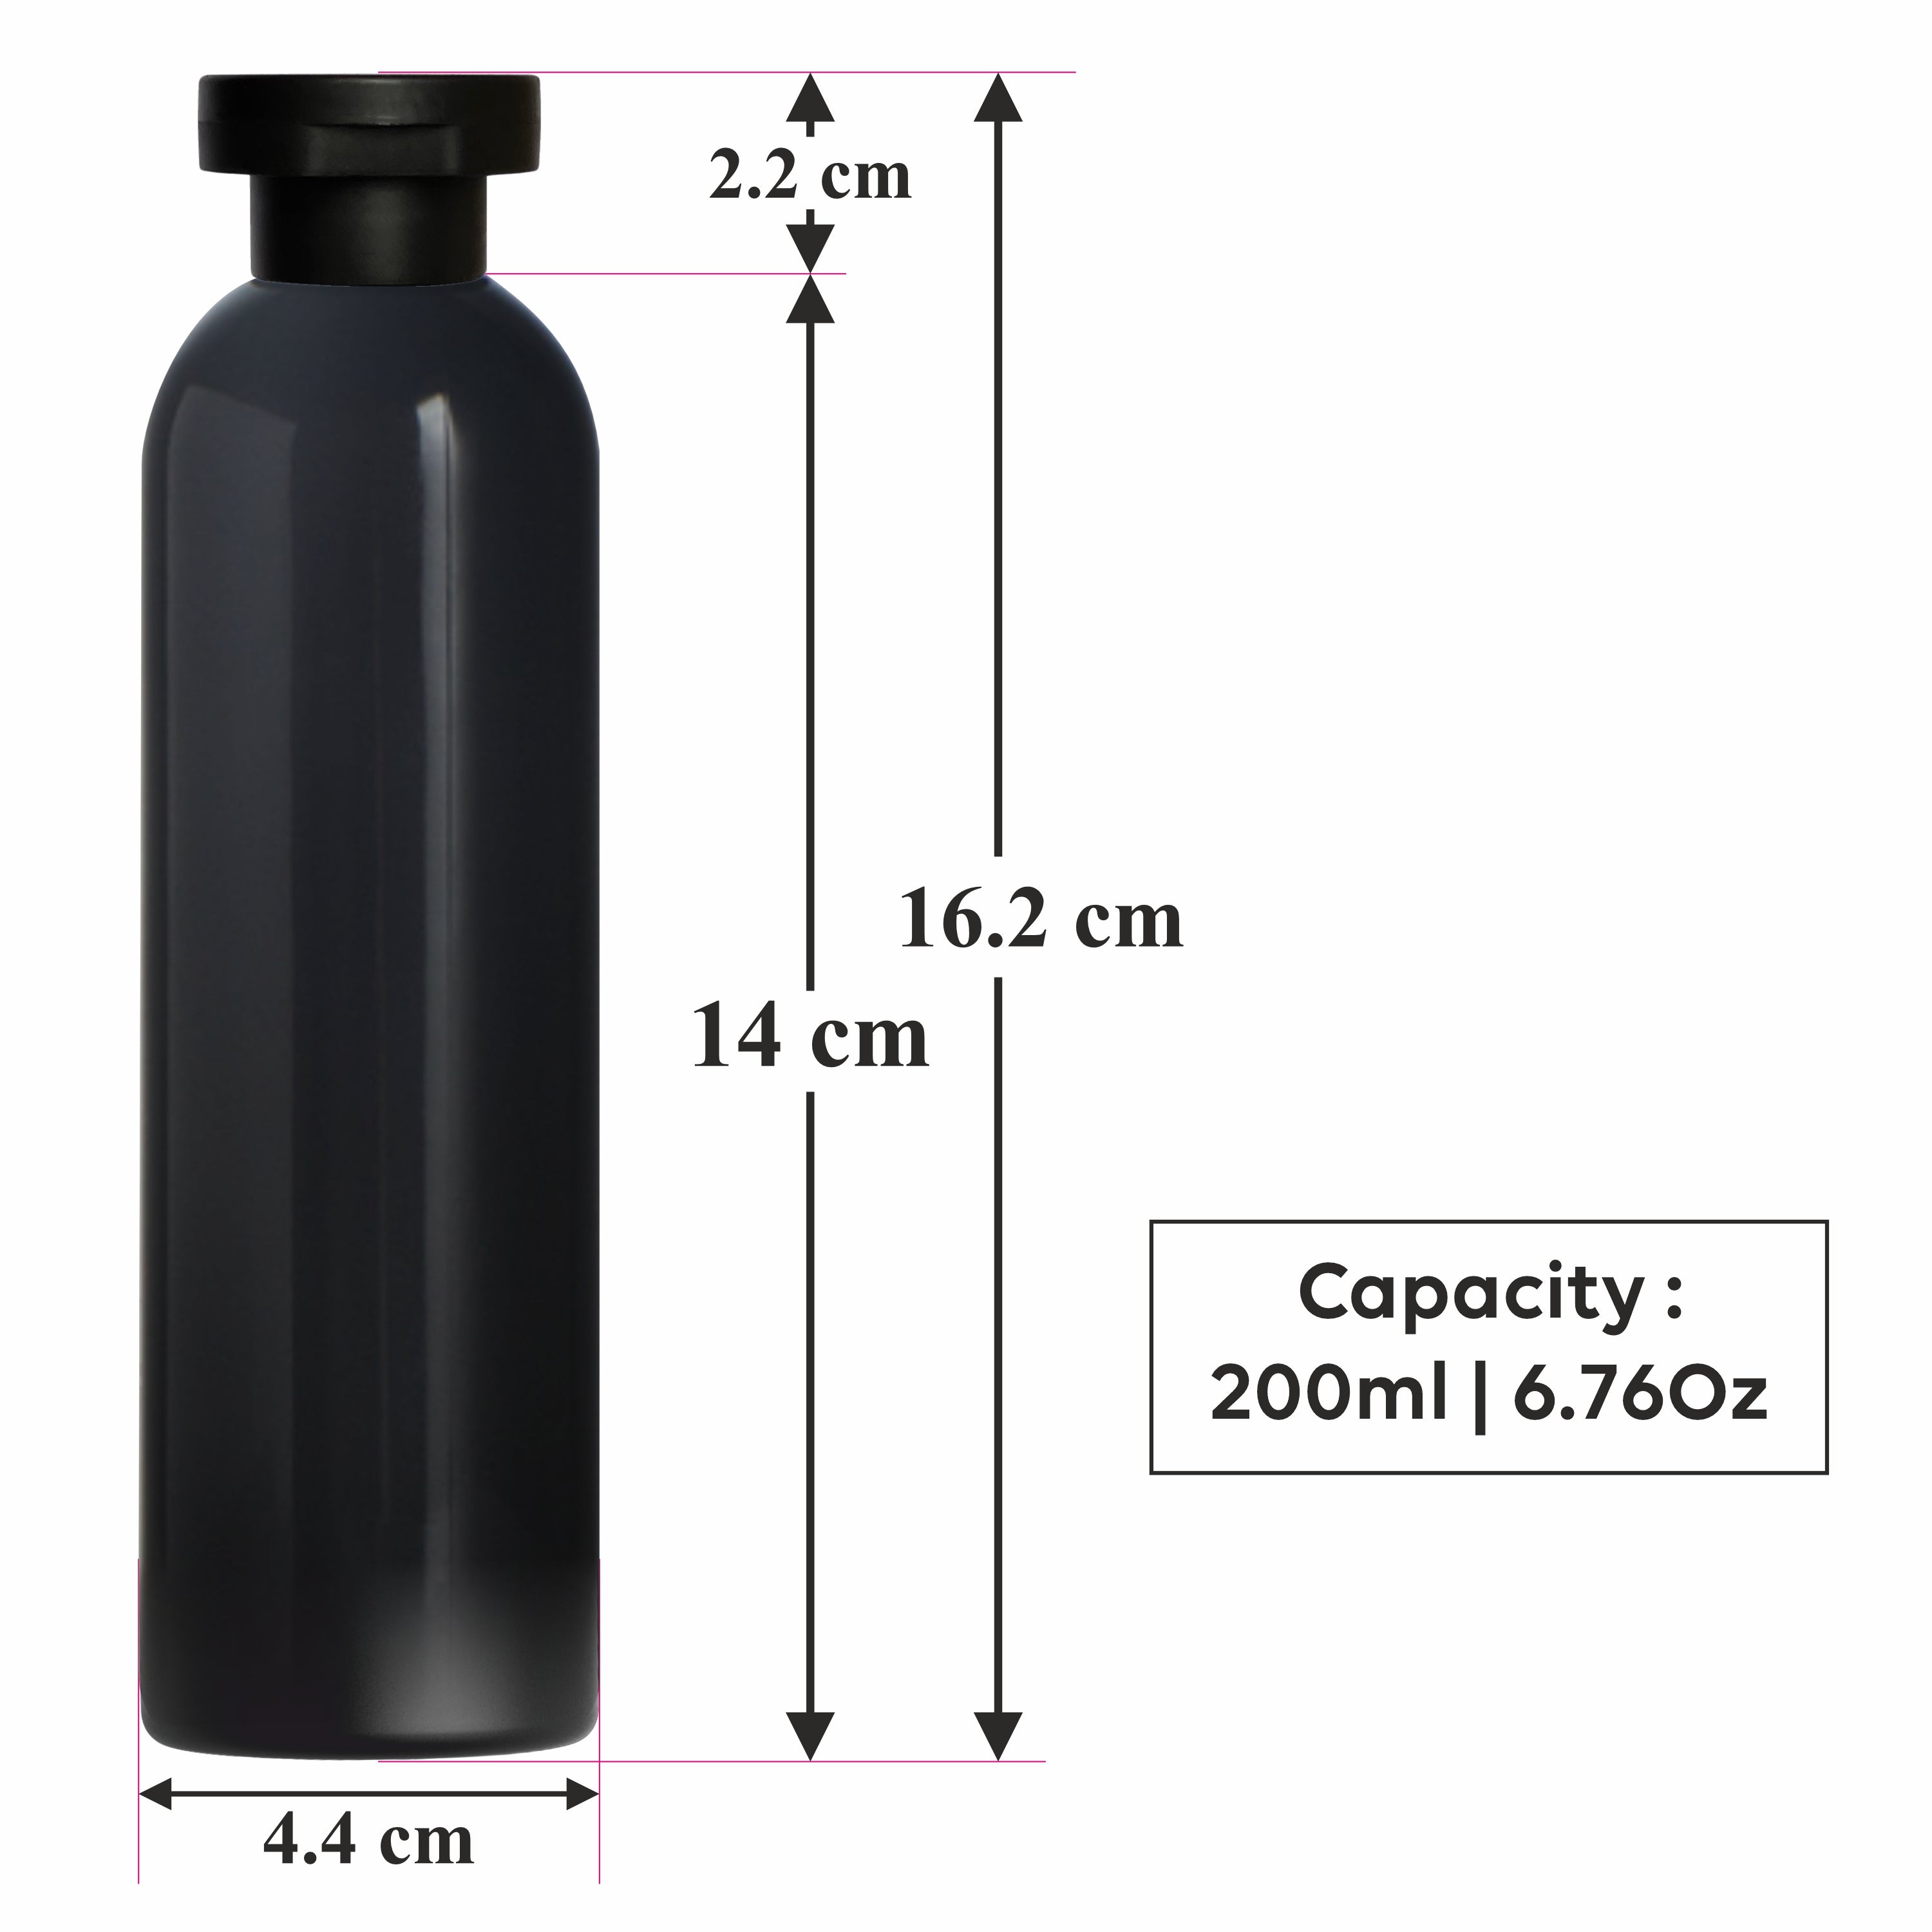 |ZMK47| BLACK COLOR ROUND NECK BOTTLE WITH BLACK ELITE FLIPTOP CAP Available Size: 200ml, 200ml